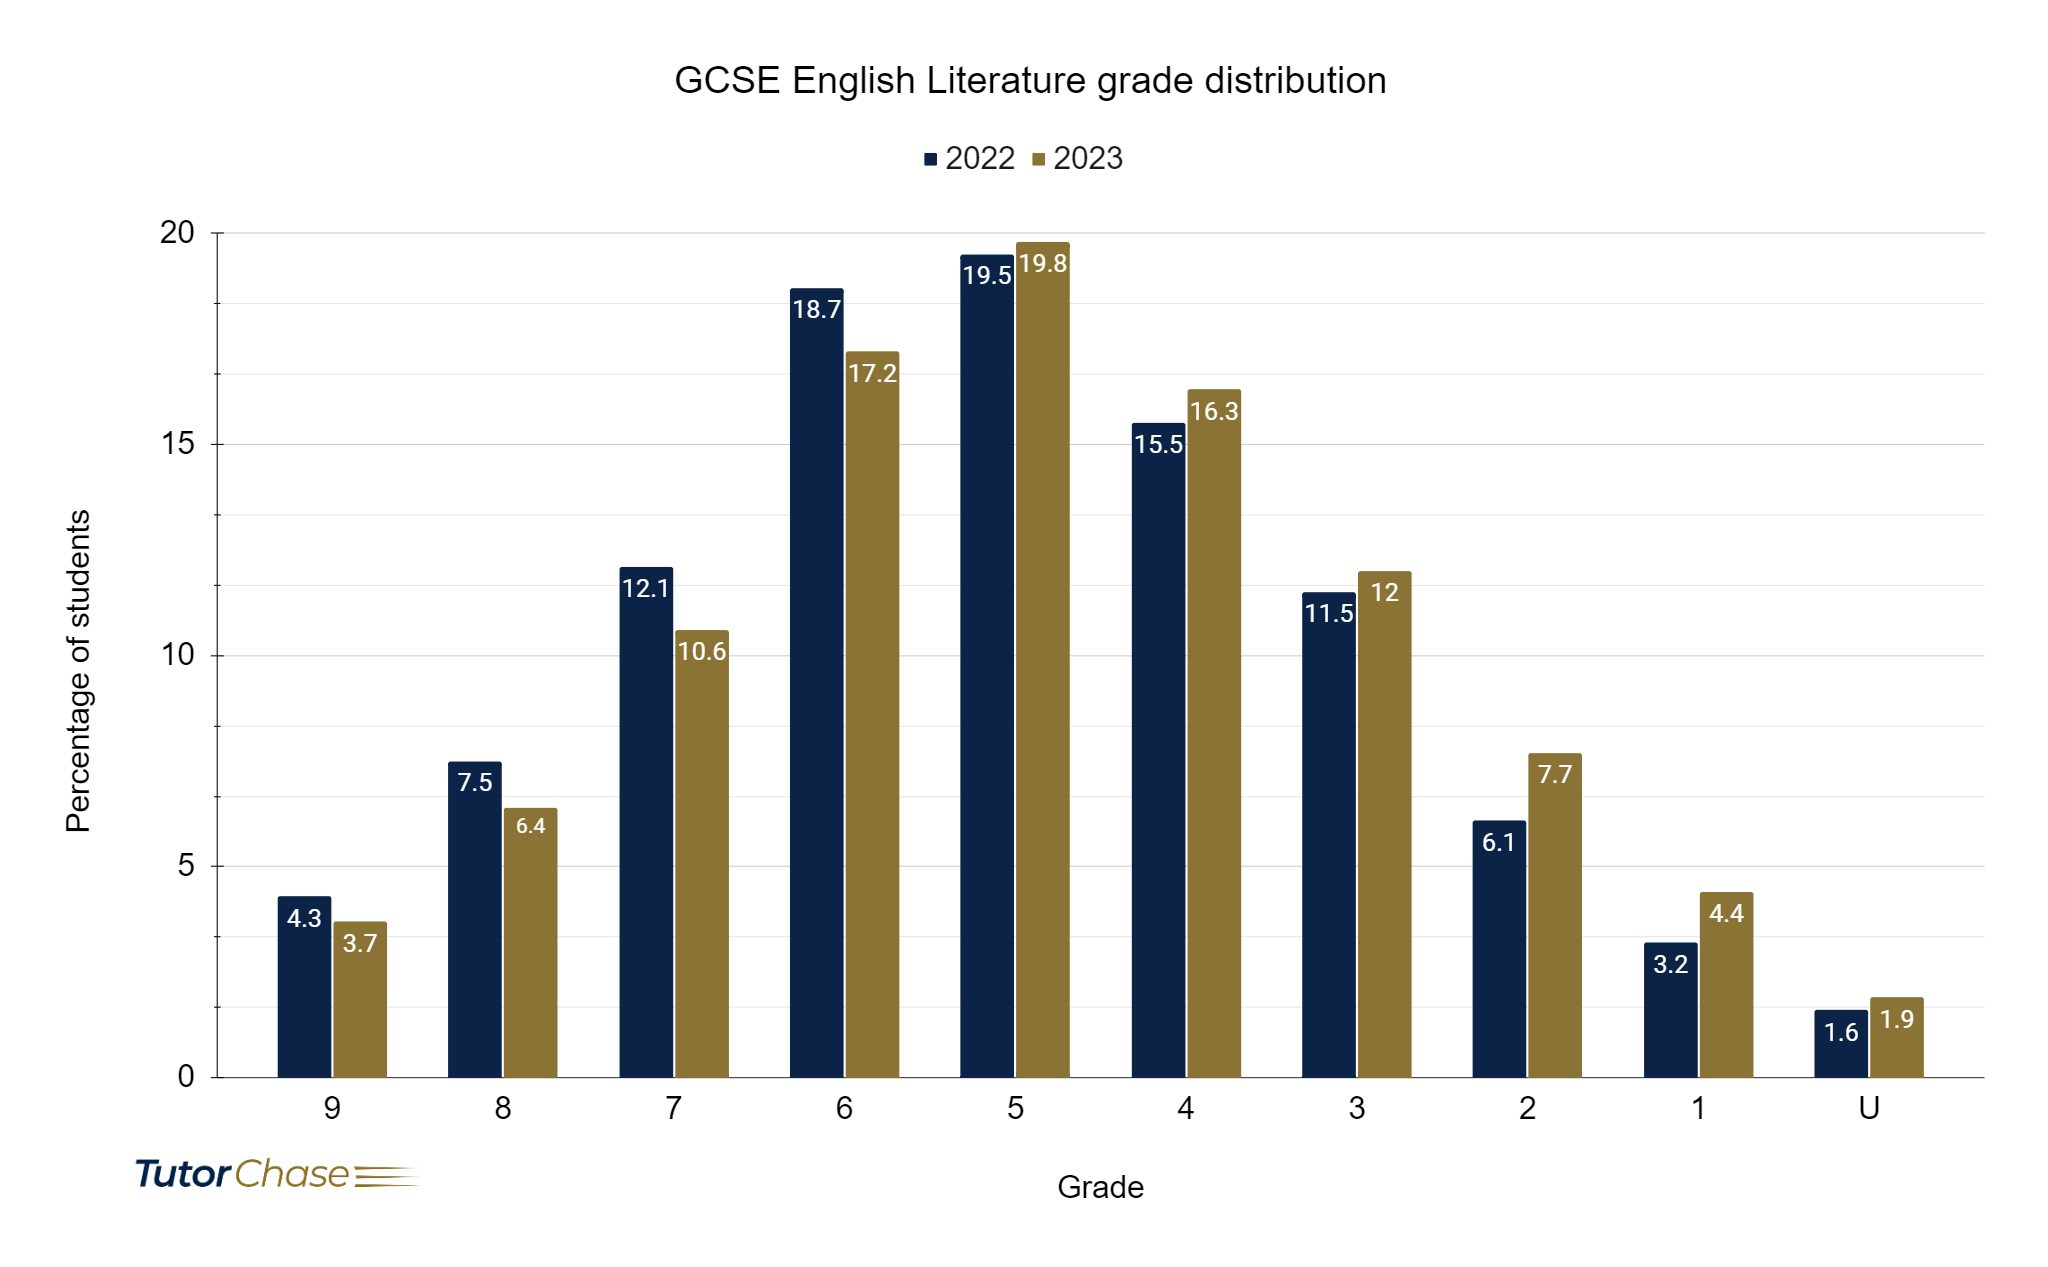 GCSE English Literature grade distribution for 2022 and 2023